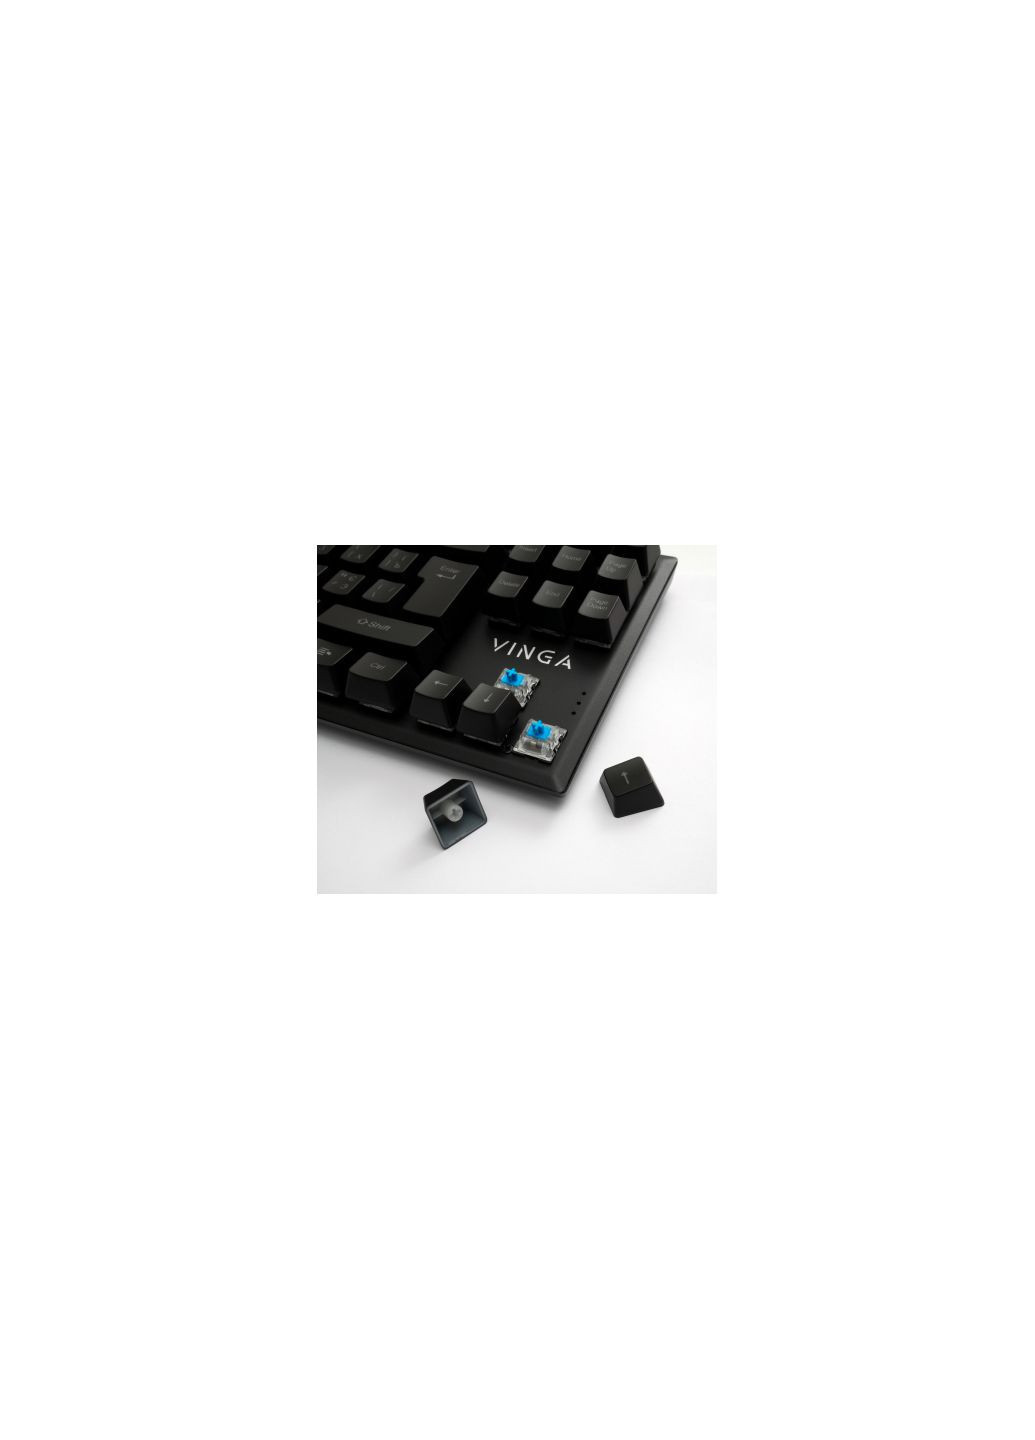 Клавиатура KBGM110 87 key LED Blue Switch USB Black (KBGM-110 Black) Vinga kbgm-110 87 key led blue switch usb black (276706561)